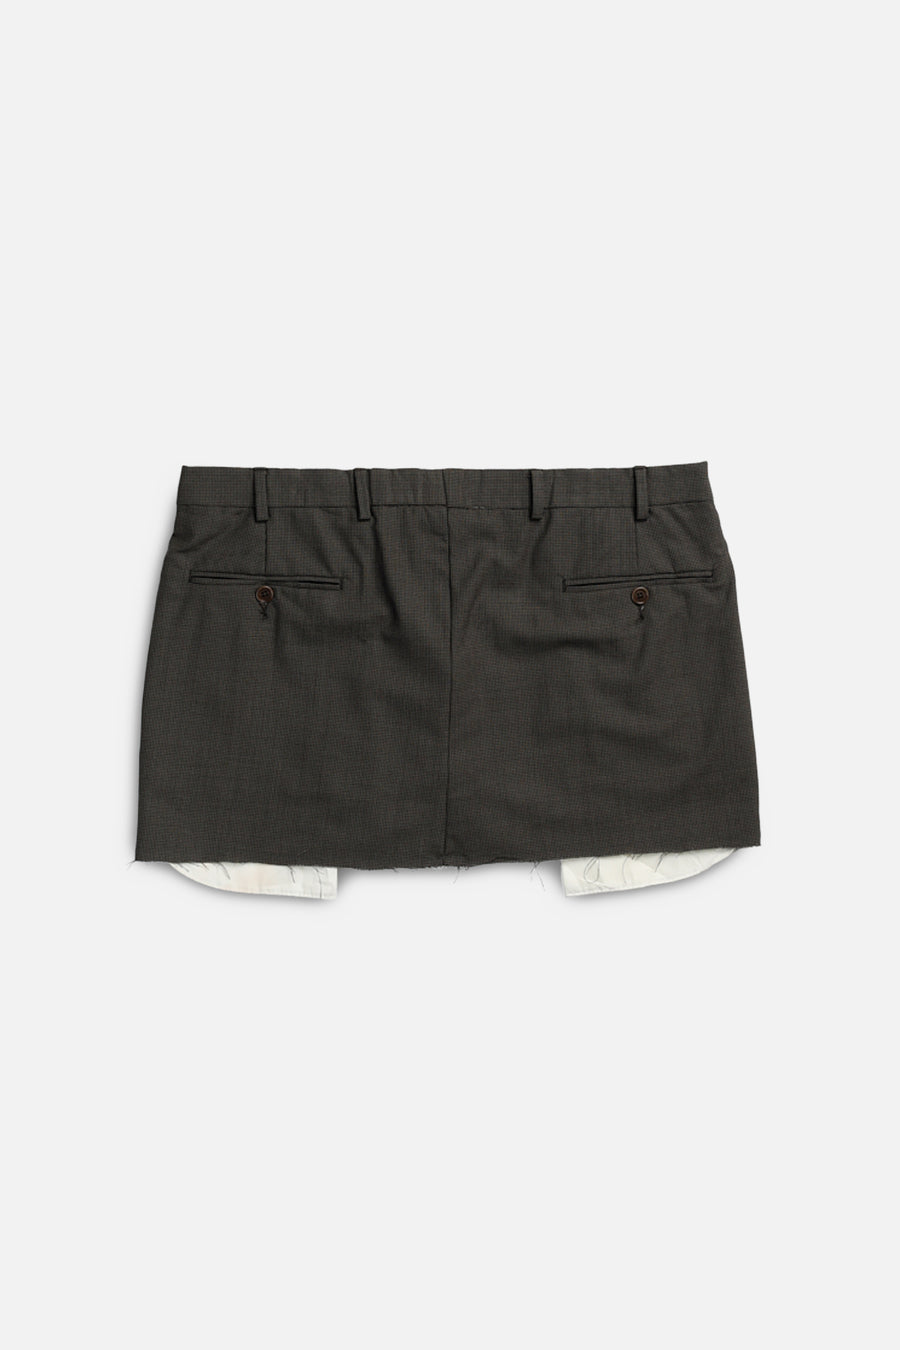 Rework Trouser Skirt - XL